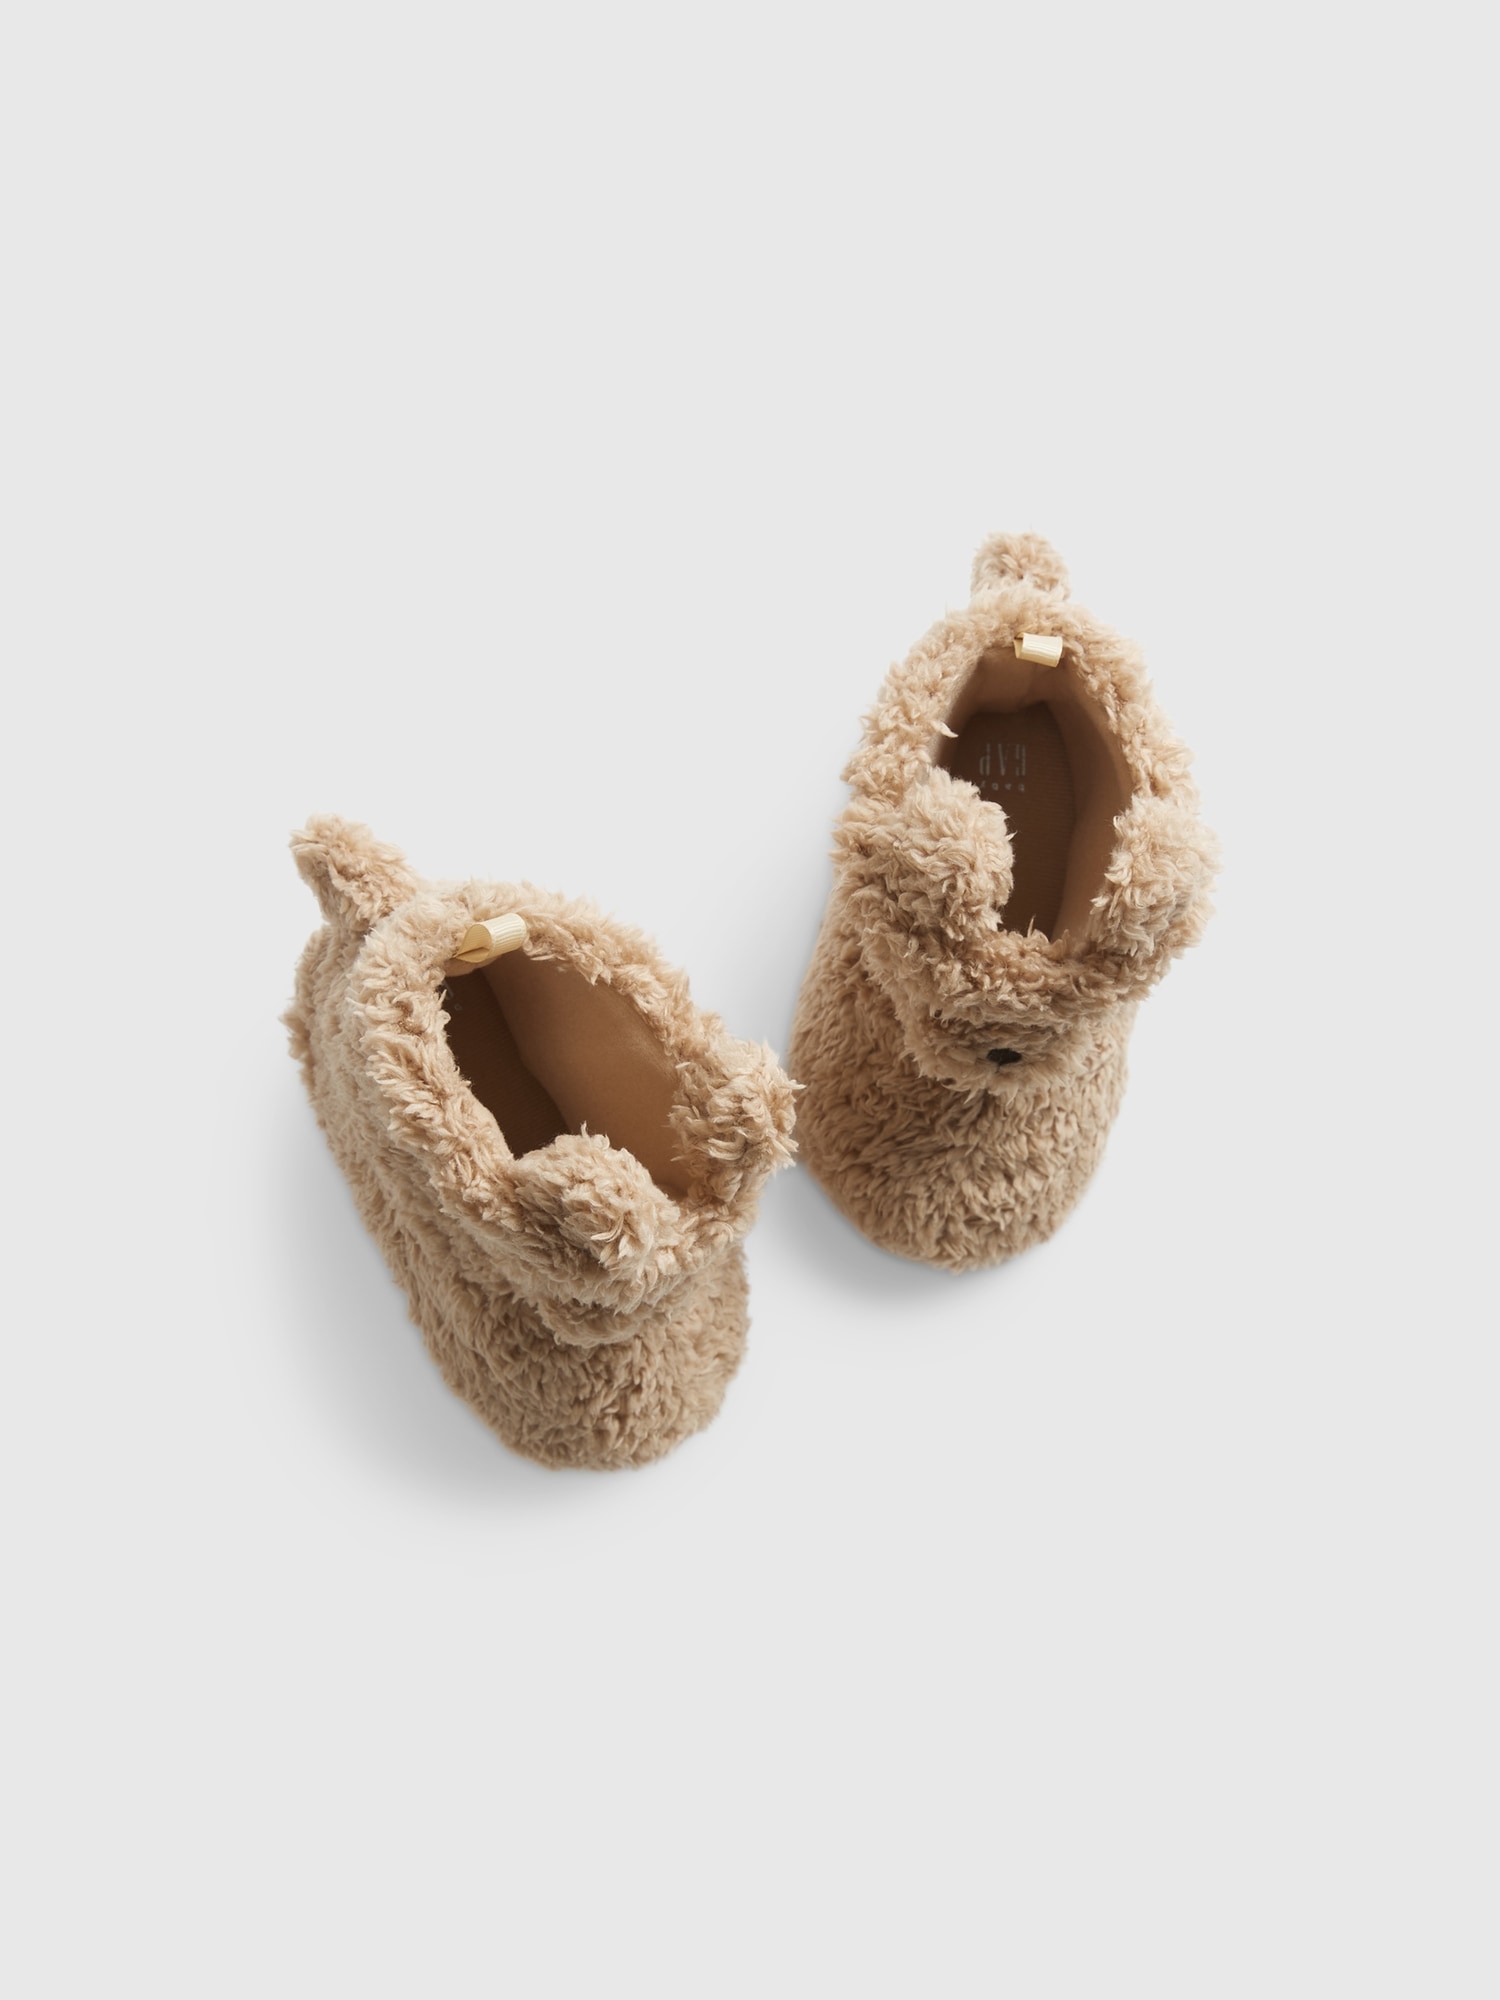 Baby Sandals, Kids Booties & Infant Footwear Buy Online Now